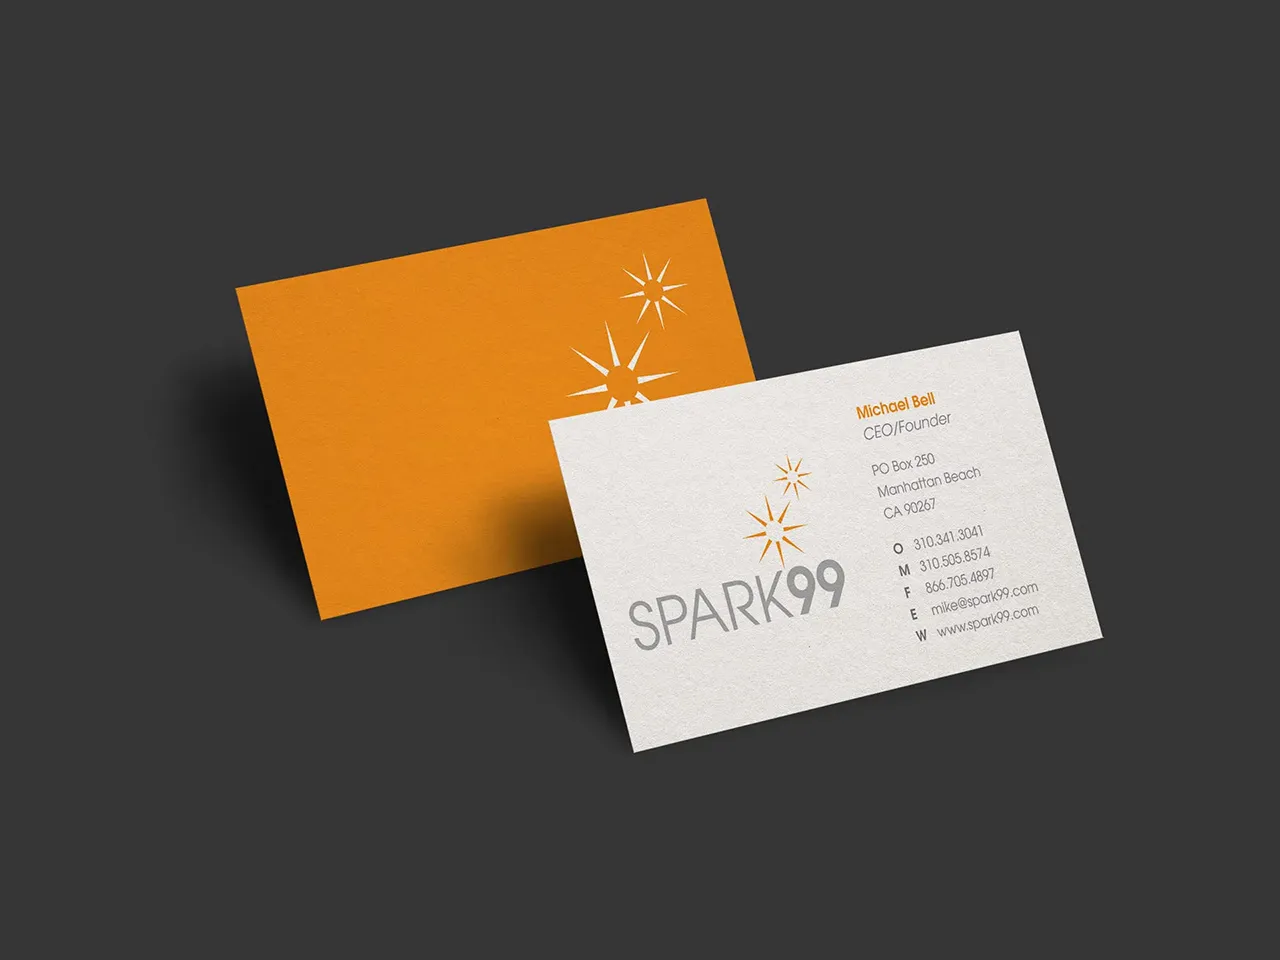 Spark 99 business cards